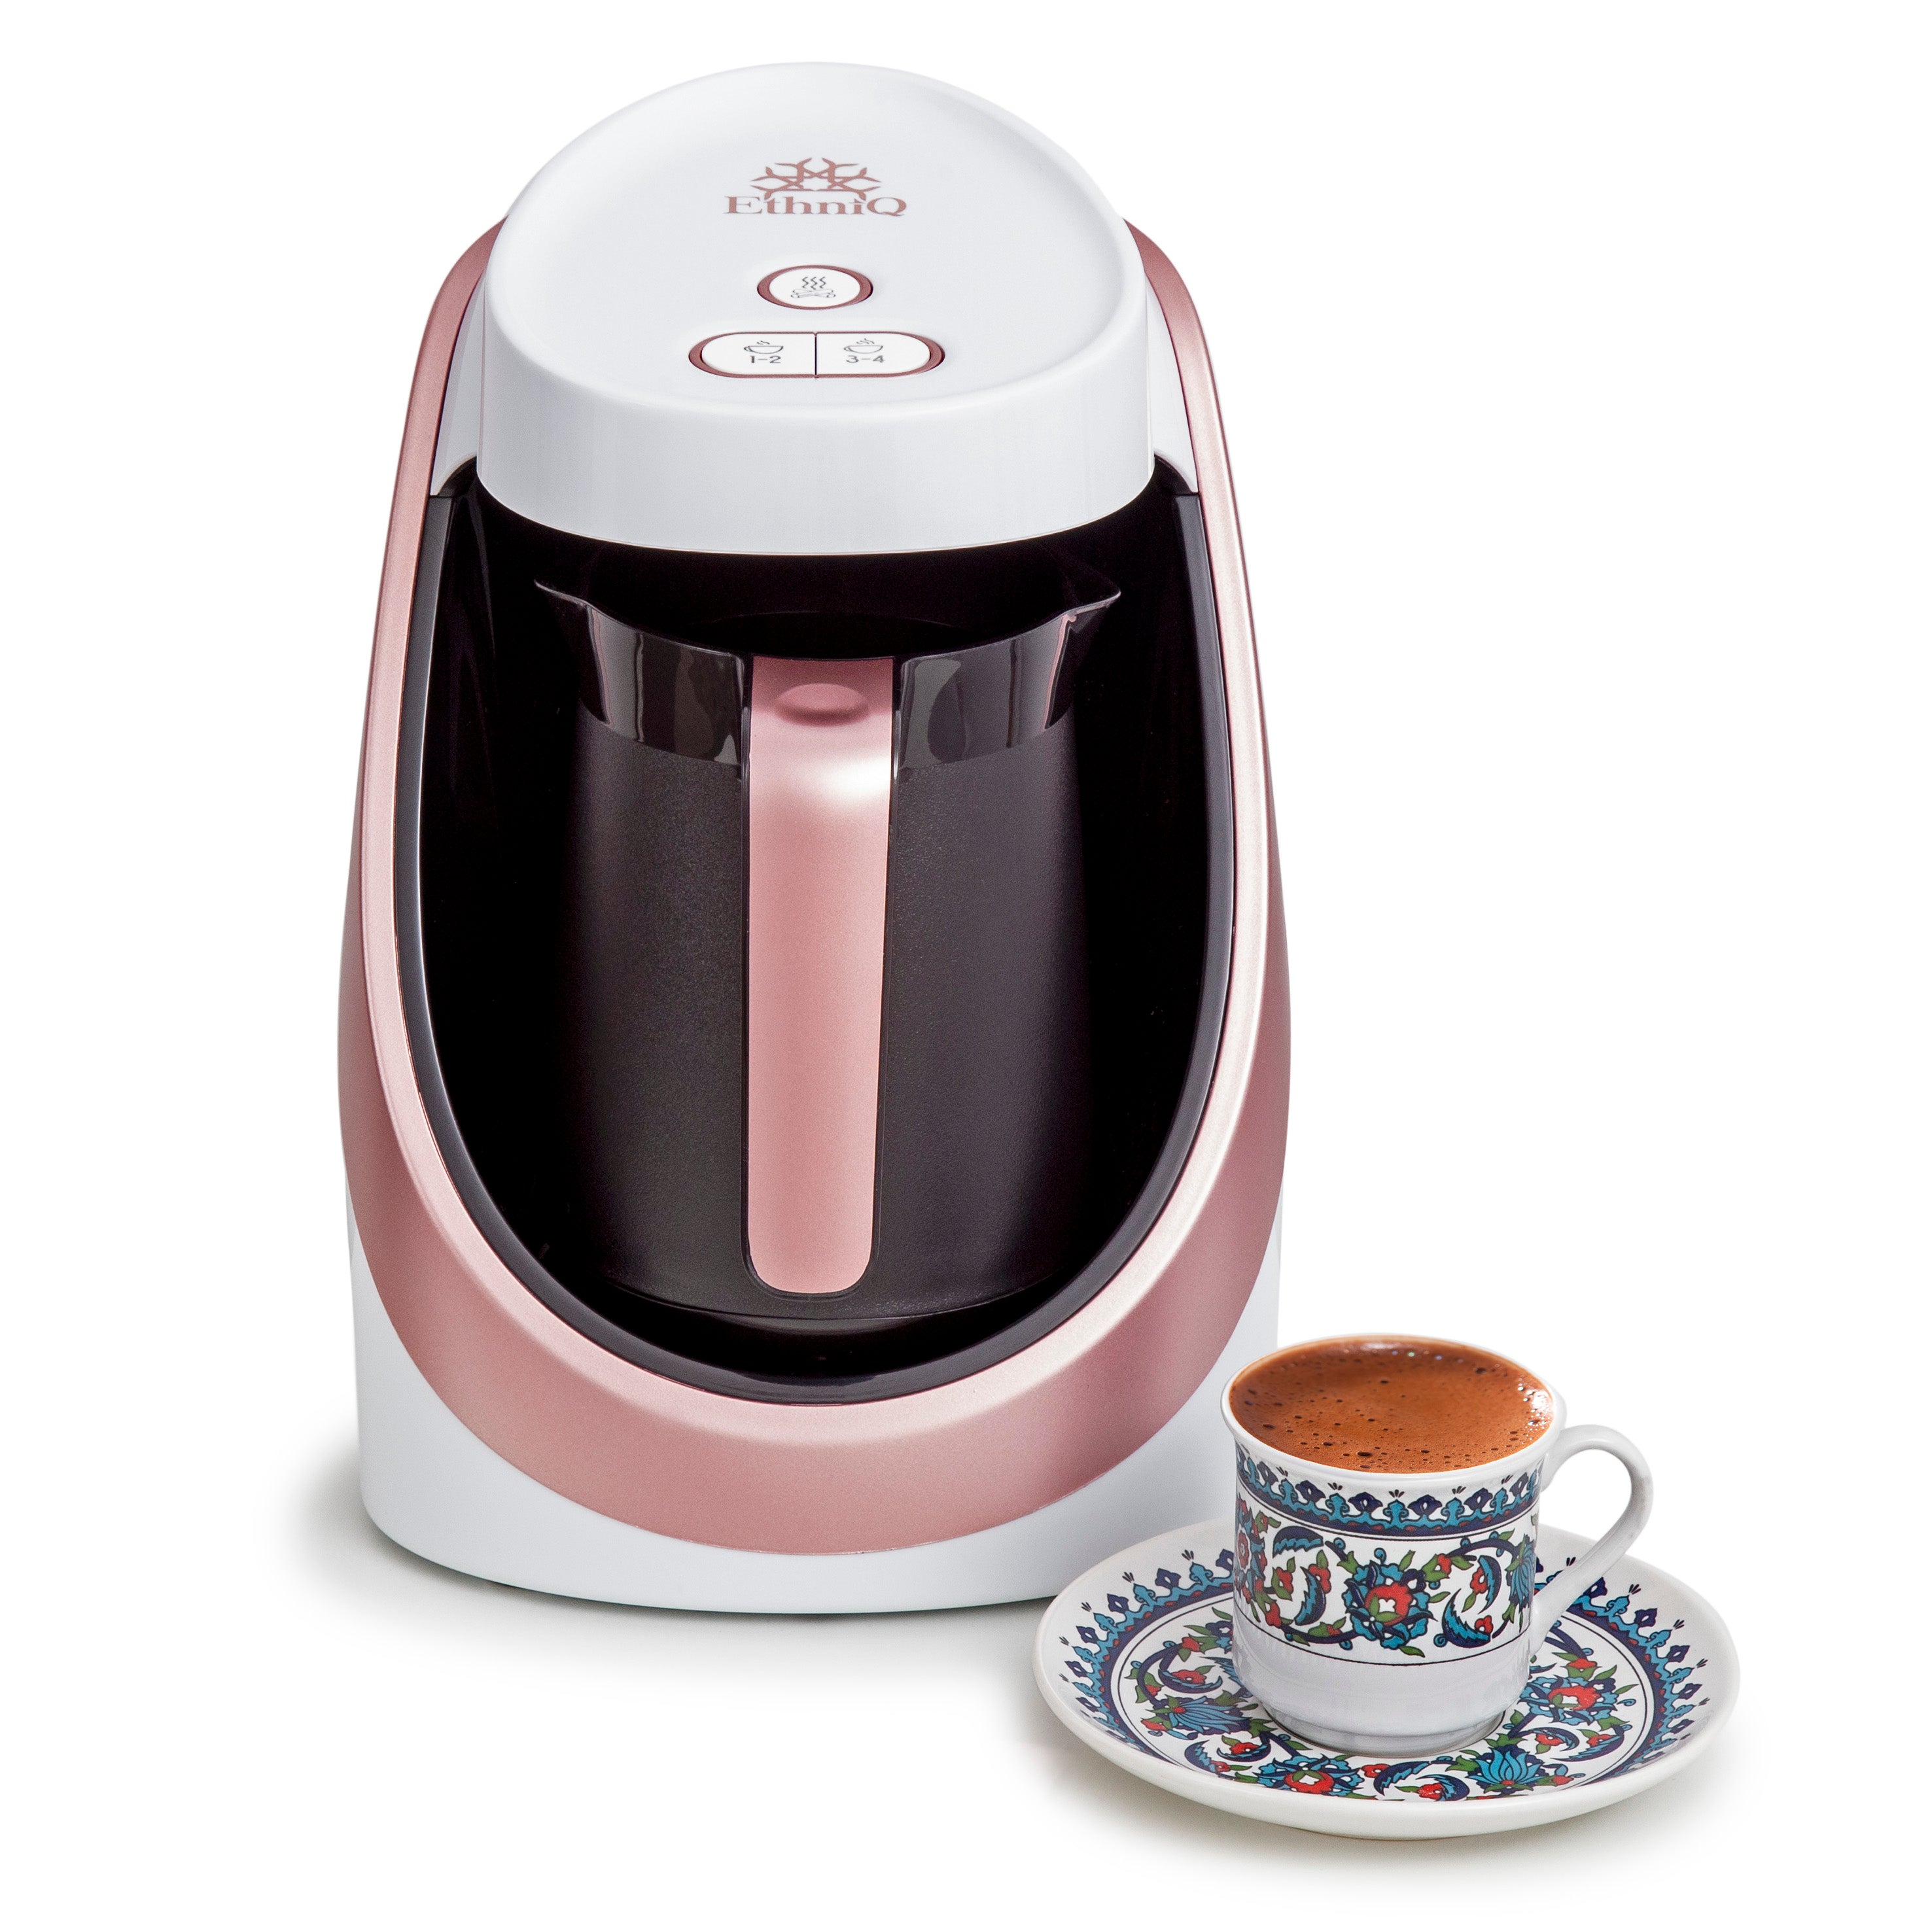 Saki Automatic Electric Turkish Coffee Maker with Cook Sense Technology,  White, 1 Piece - Harris Teeter